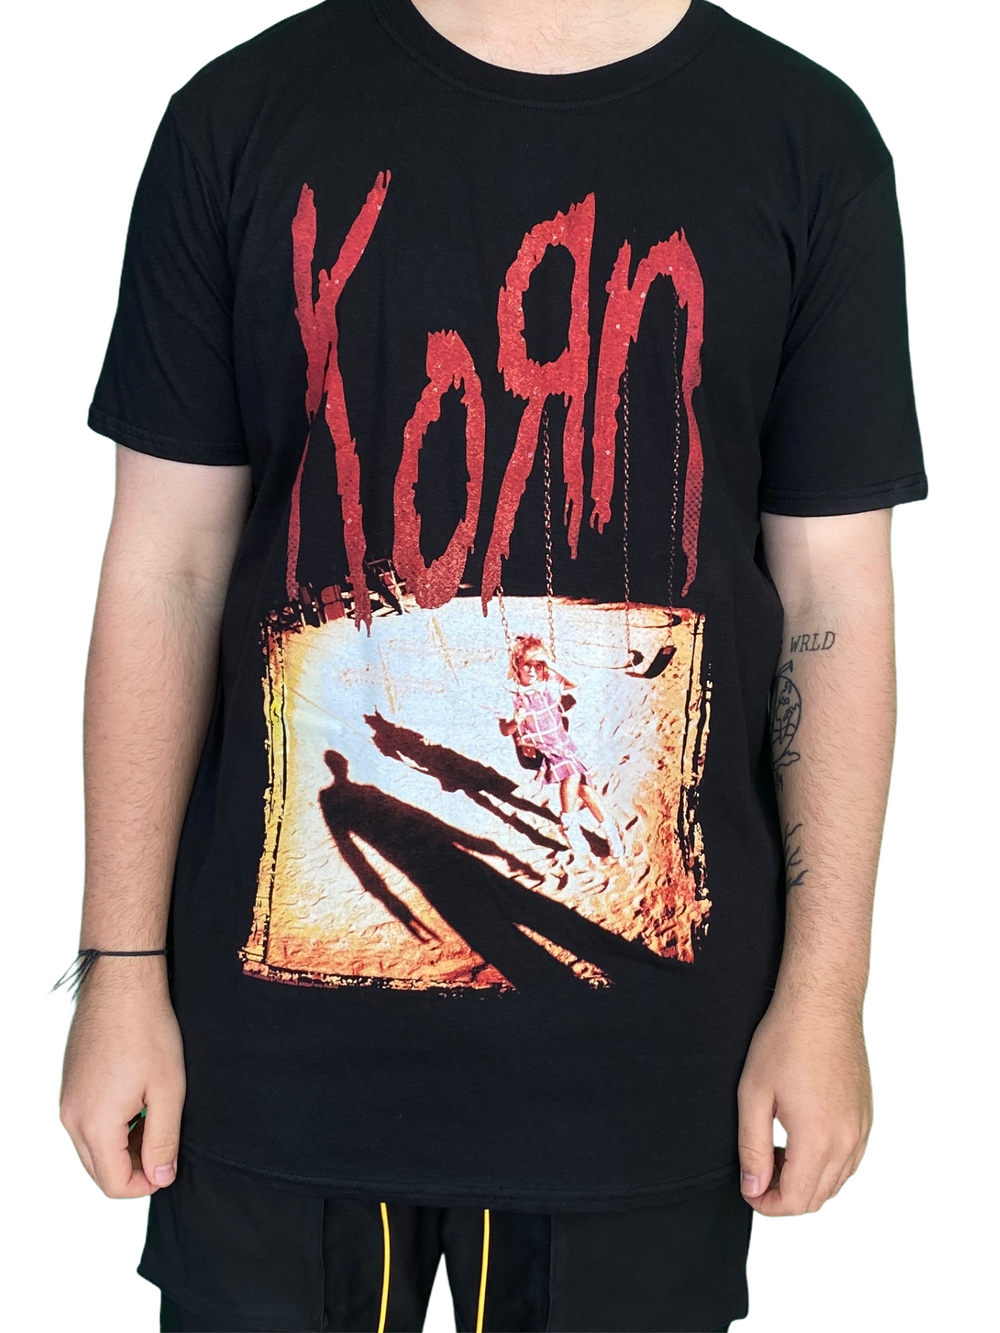 Korn Korn Official T Shirt Brand New Various Sizes